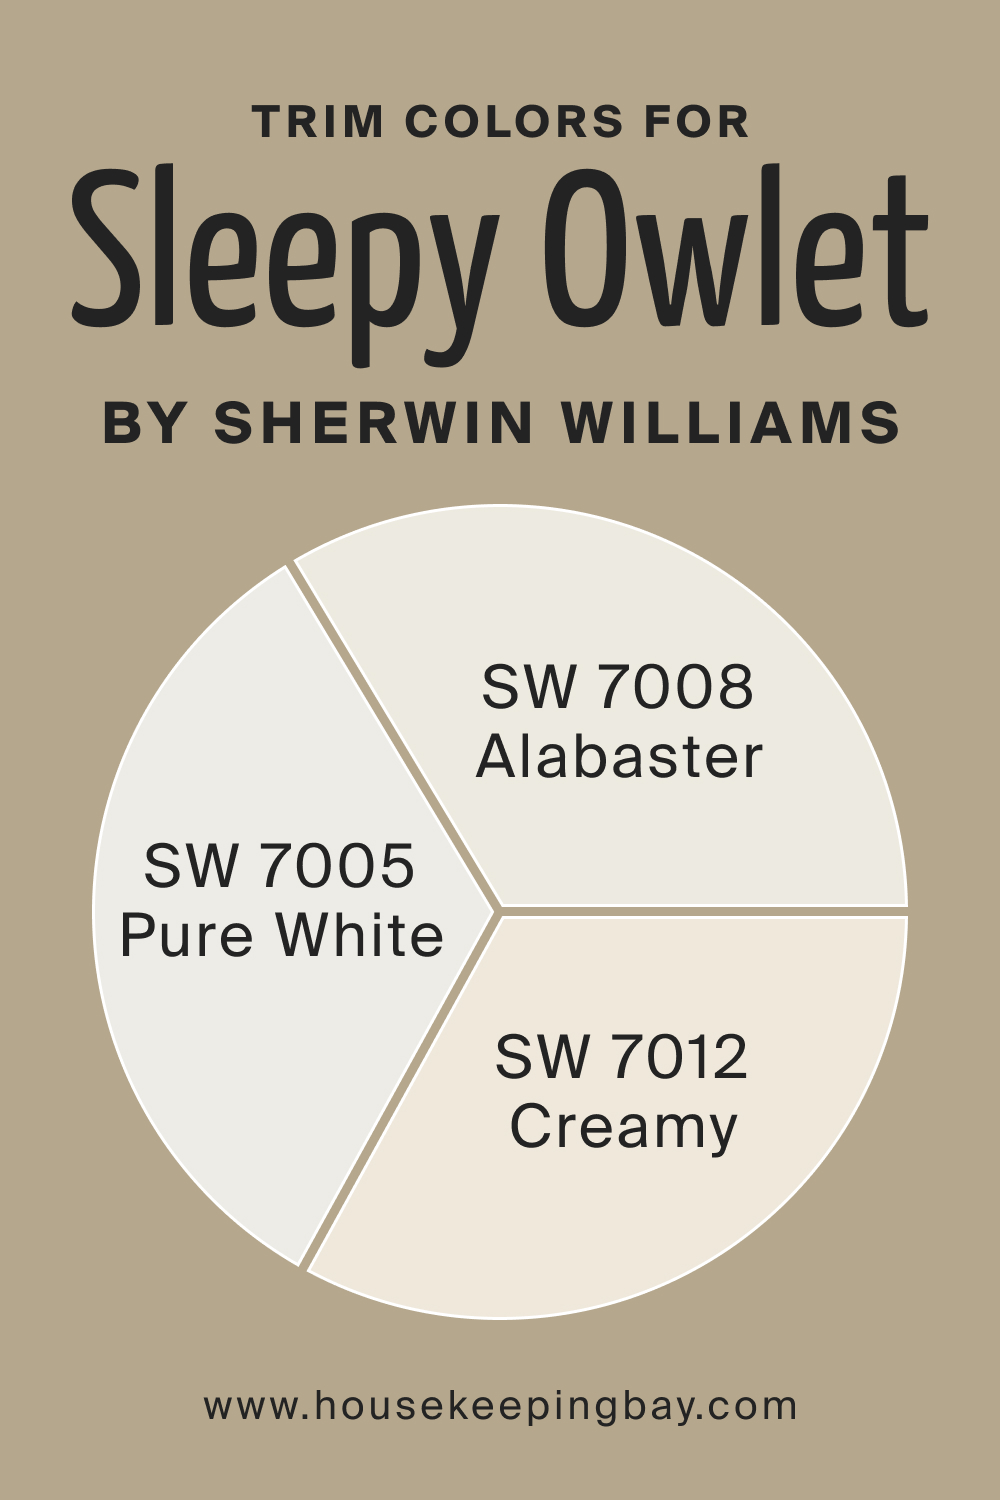 Trim Colors of SW 9513 Sleepy Owlet by Sherwin Williams